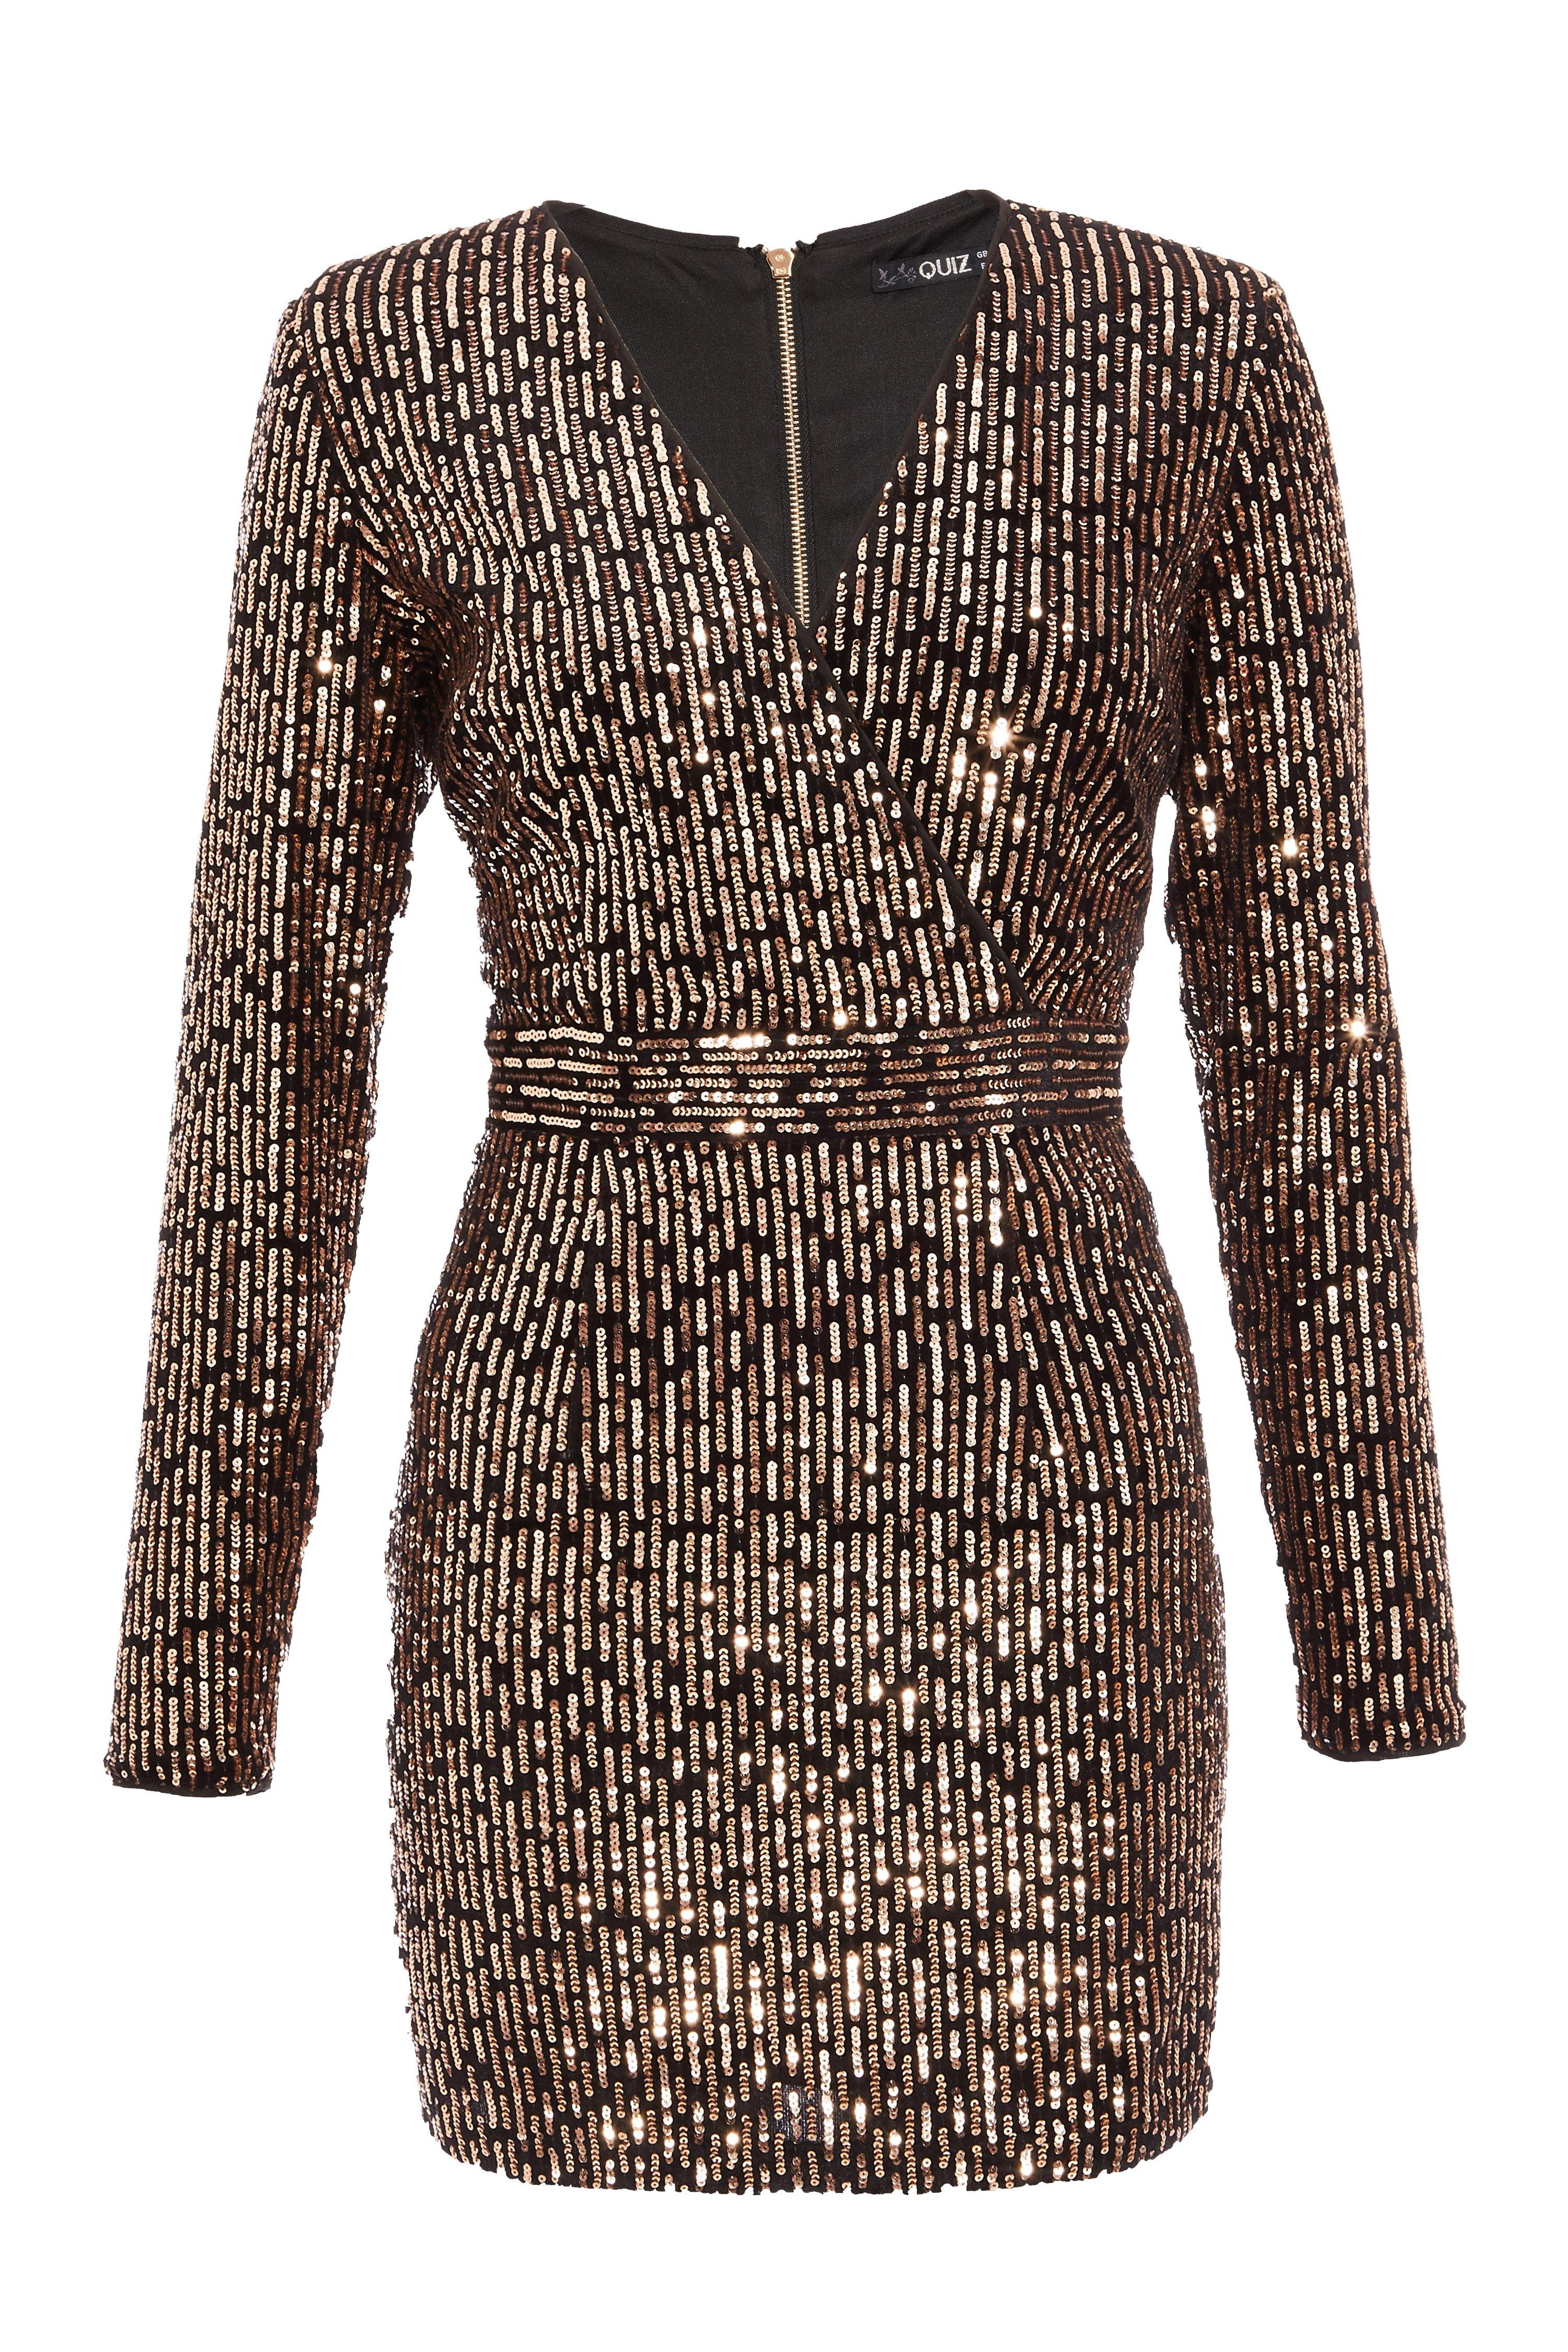 Sam Faiers Petite Black and Rose Gold Velvet Sequin Dress - Quiz Clothing